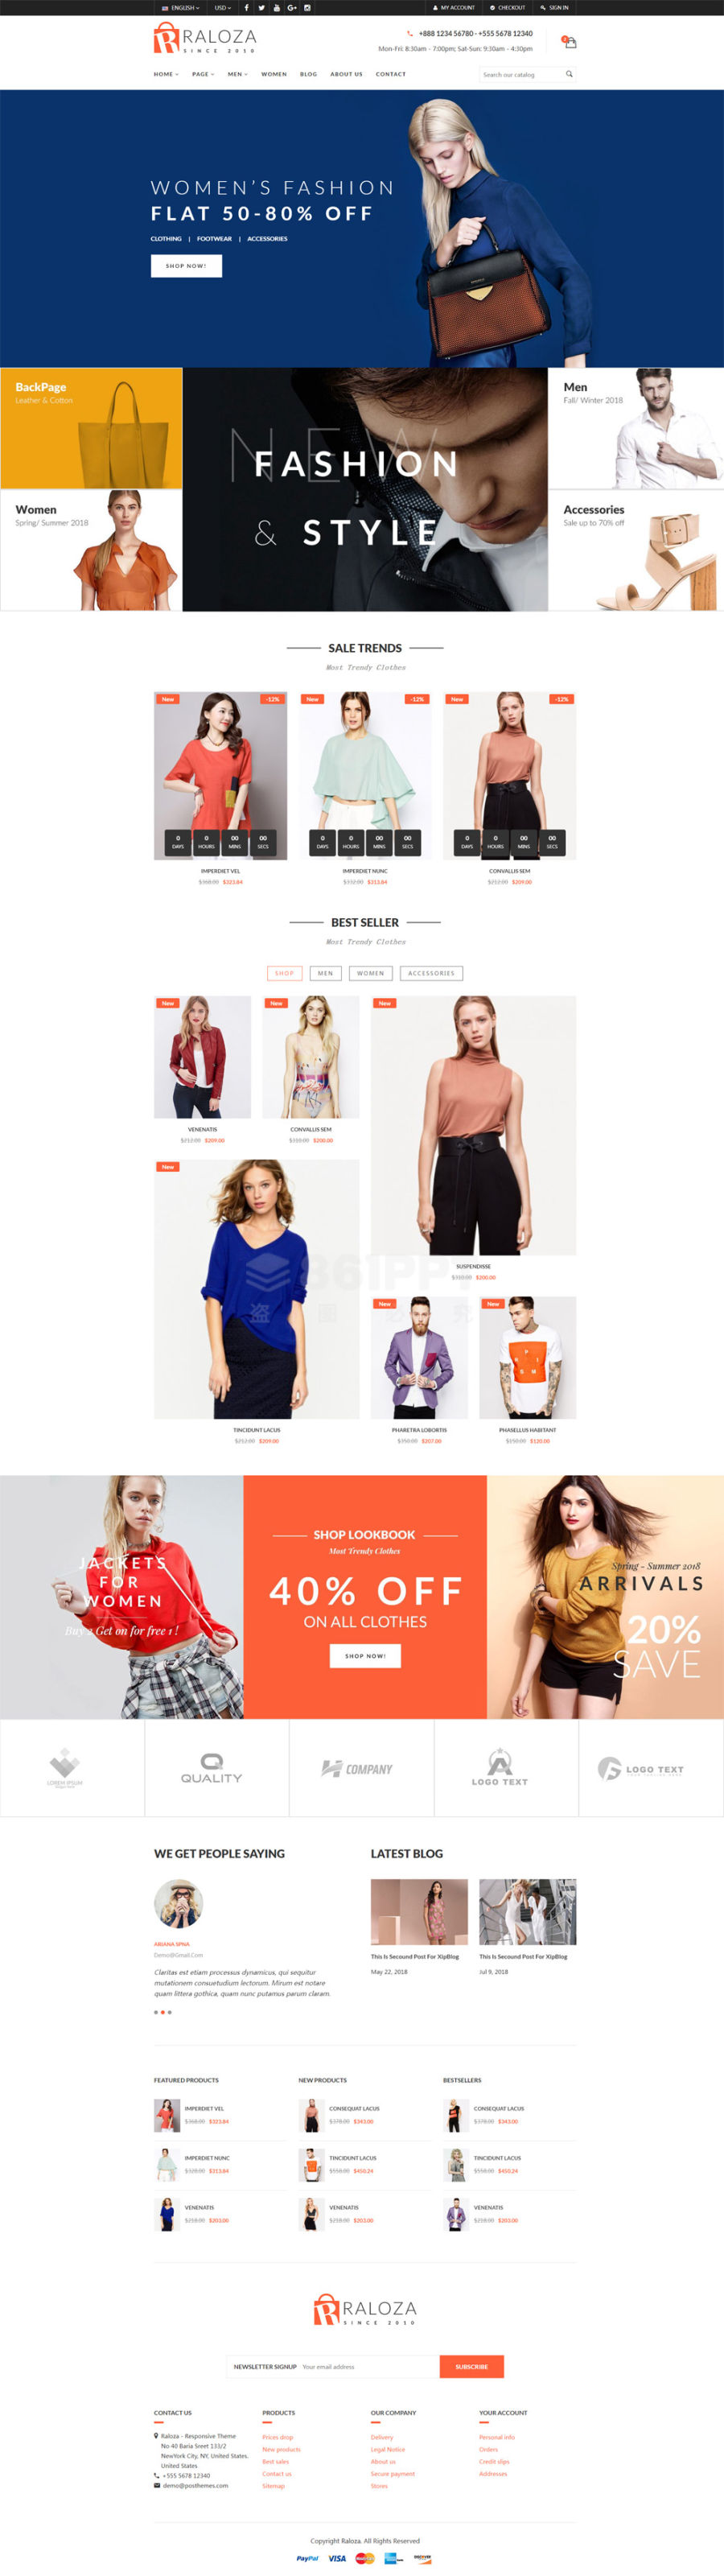 Raloza时尚服装包包电商网站模板，让你的在线购物更加简单